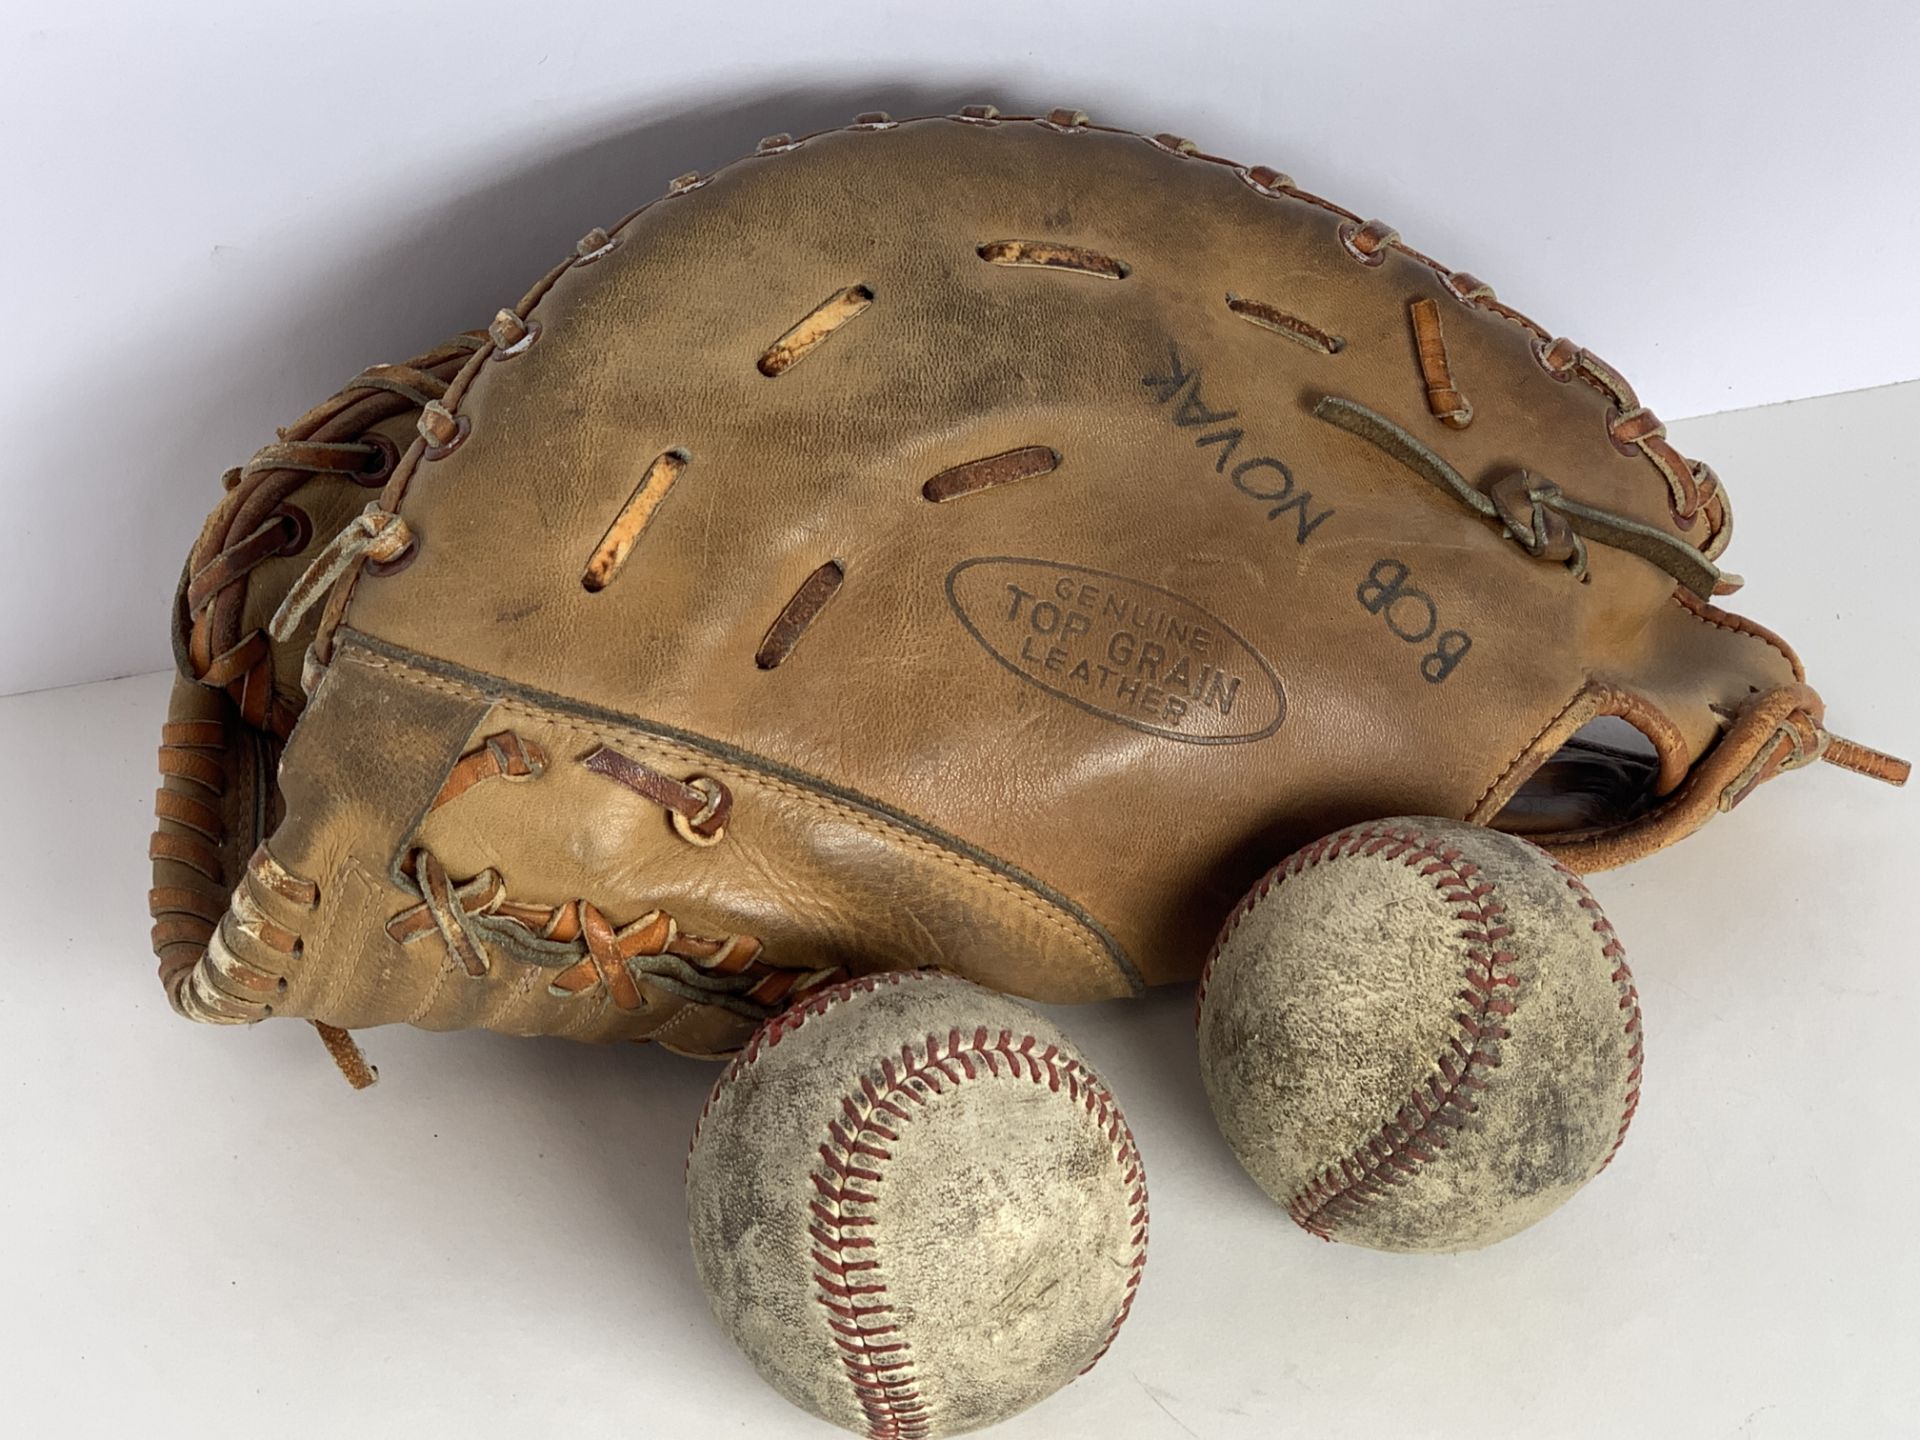 Vintage Baseball Glove and 2 Balls, Sports Memorabilia, Corsair Genuine Top Grain Leather - Image 2 of 6